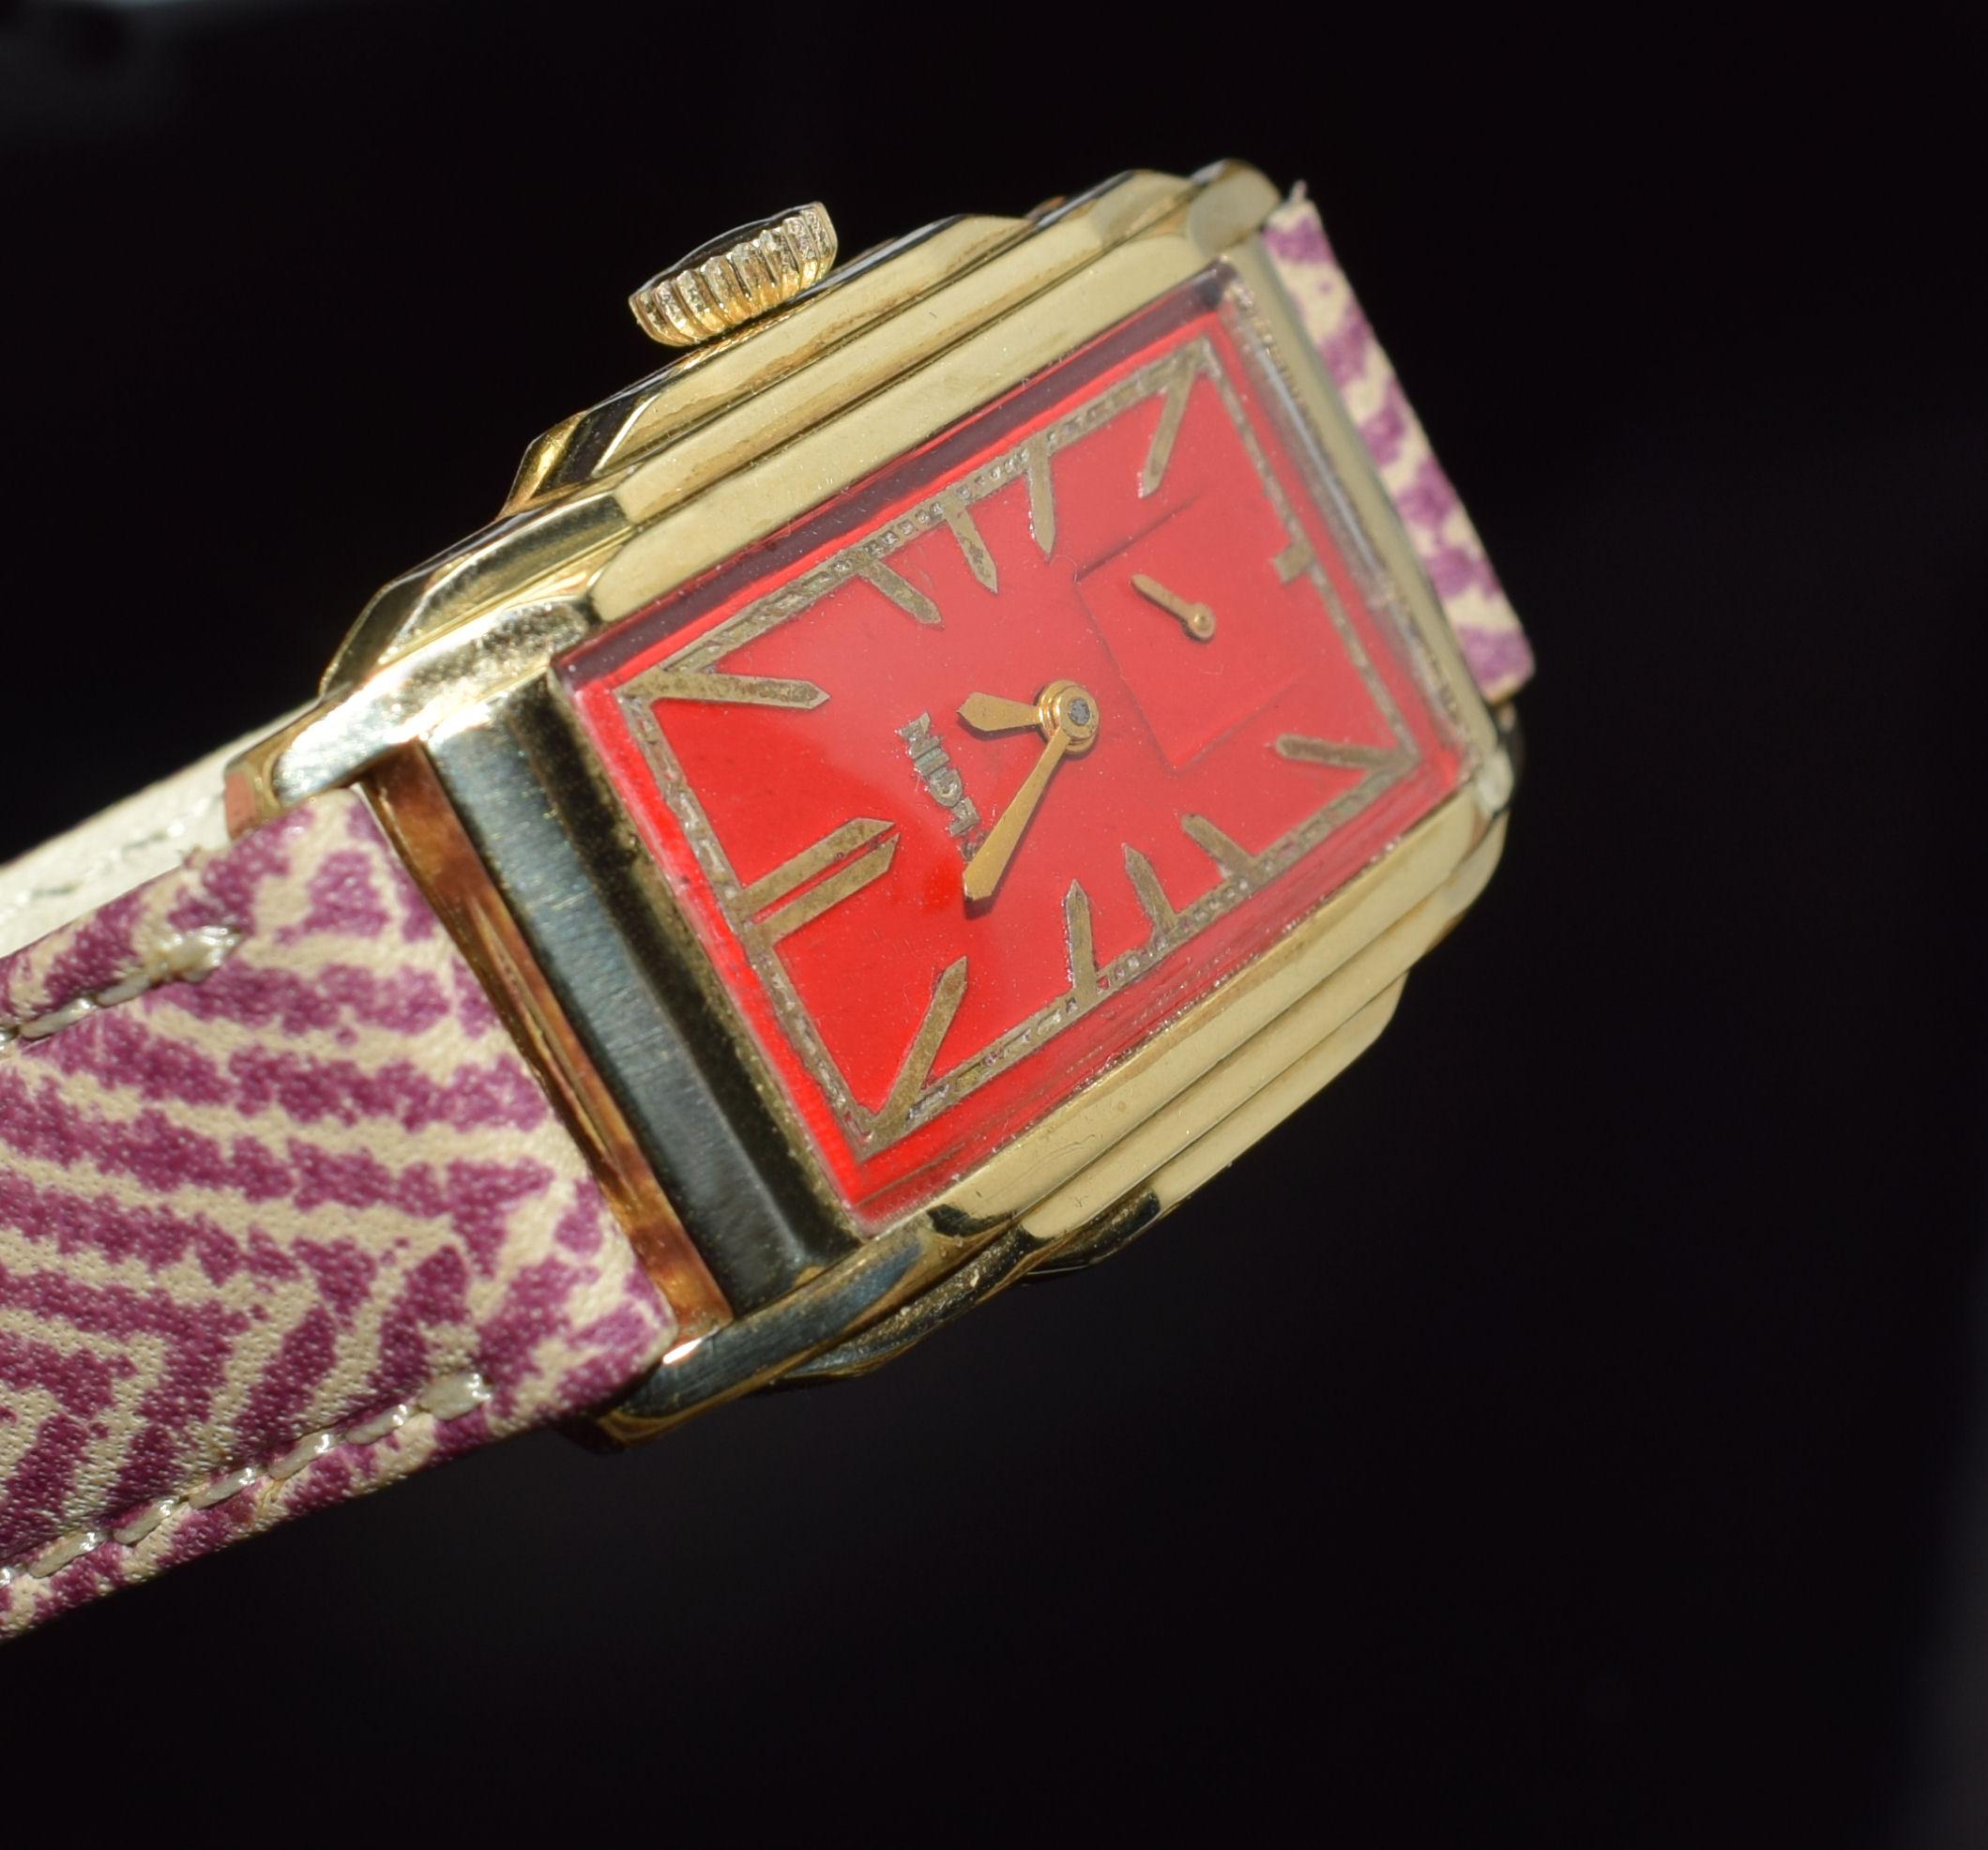 Art Deco 14-Karat Gold Cherry Red Gents Wristwatch by Elgin, Newly Serviced 1